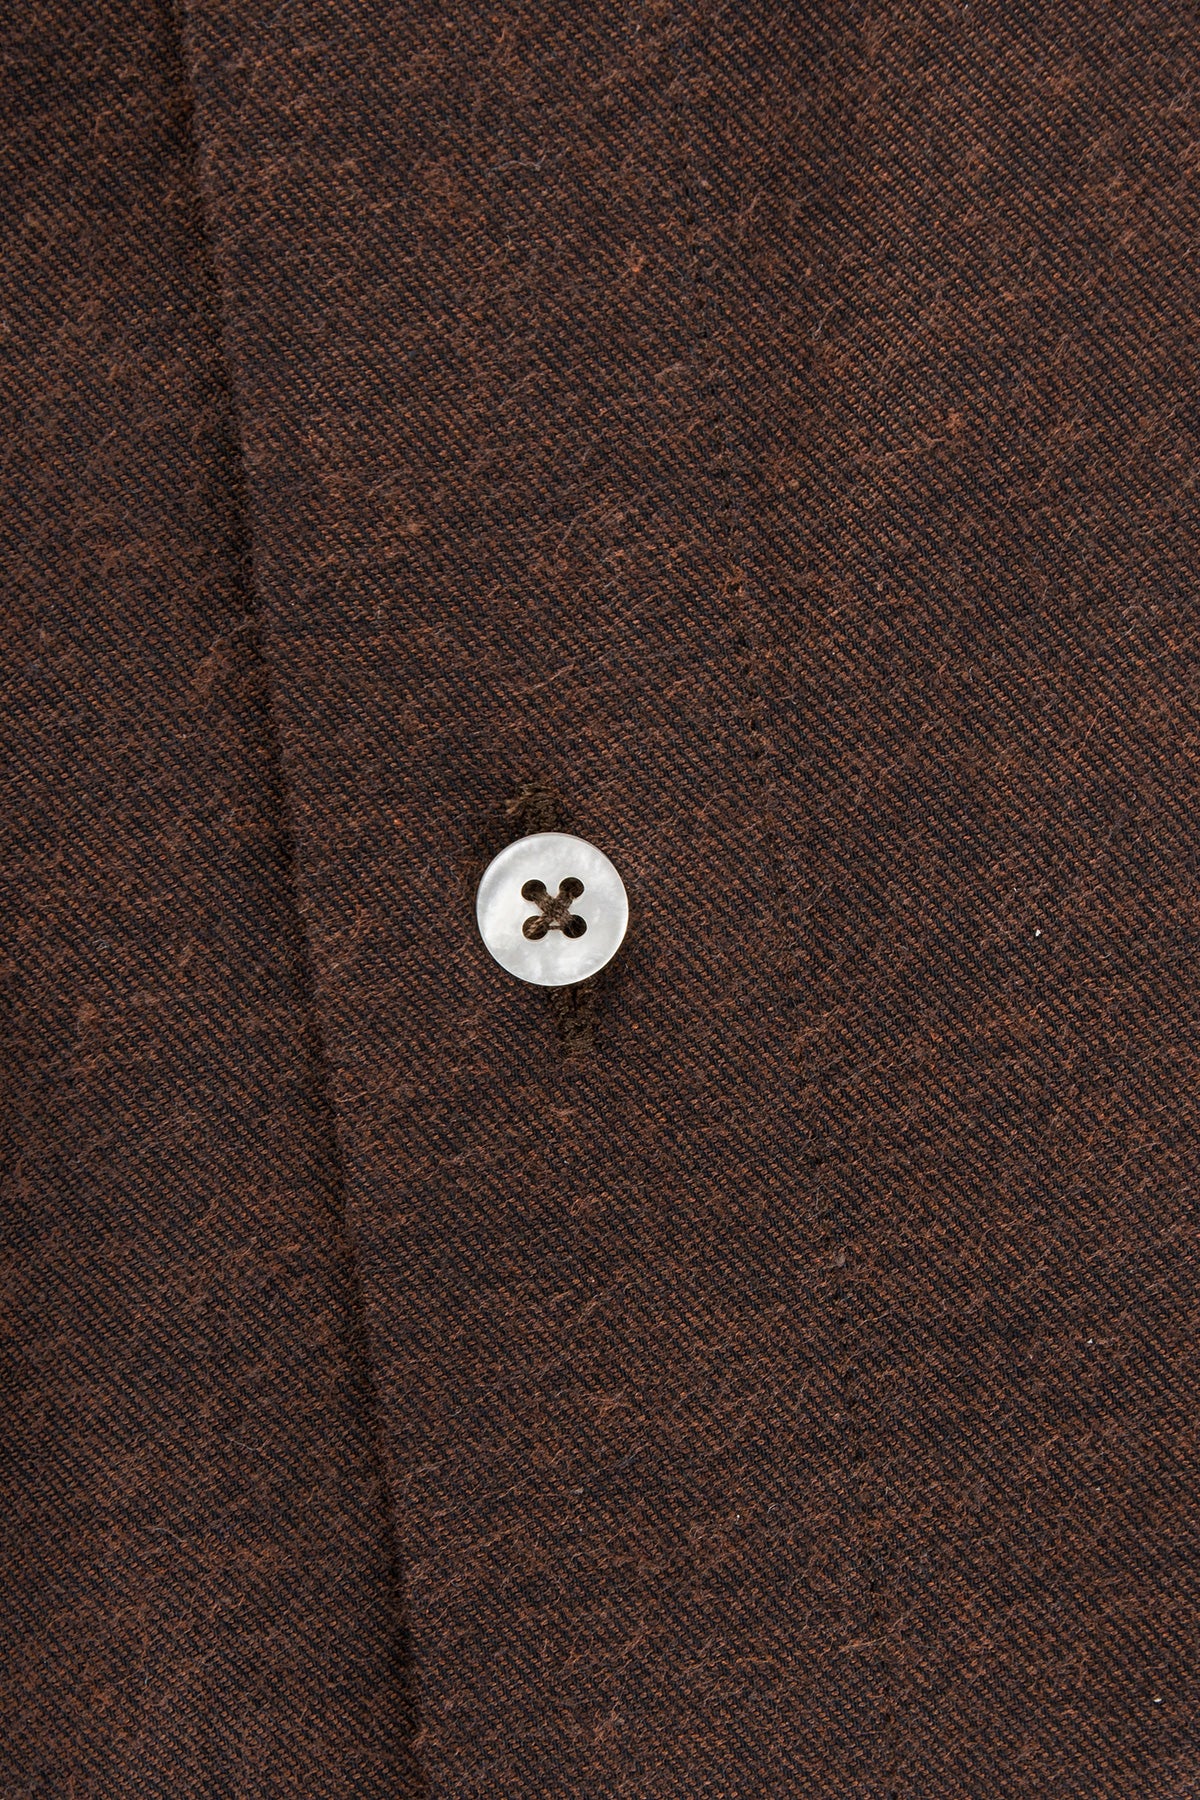 Brown flannel button down slim fit shirt